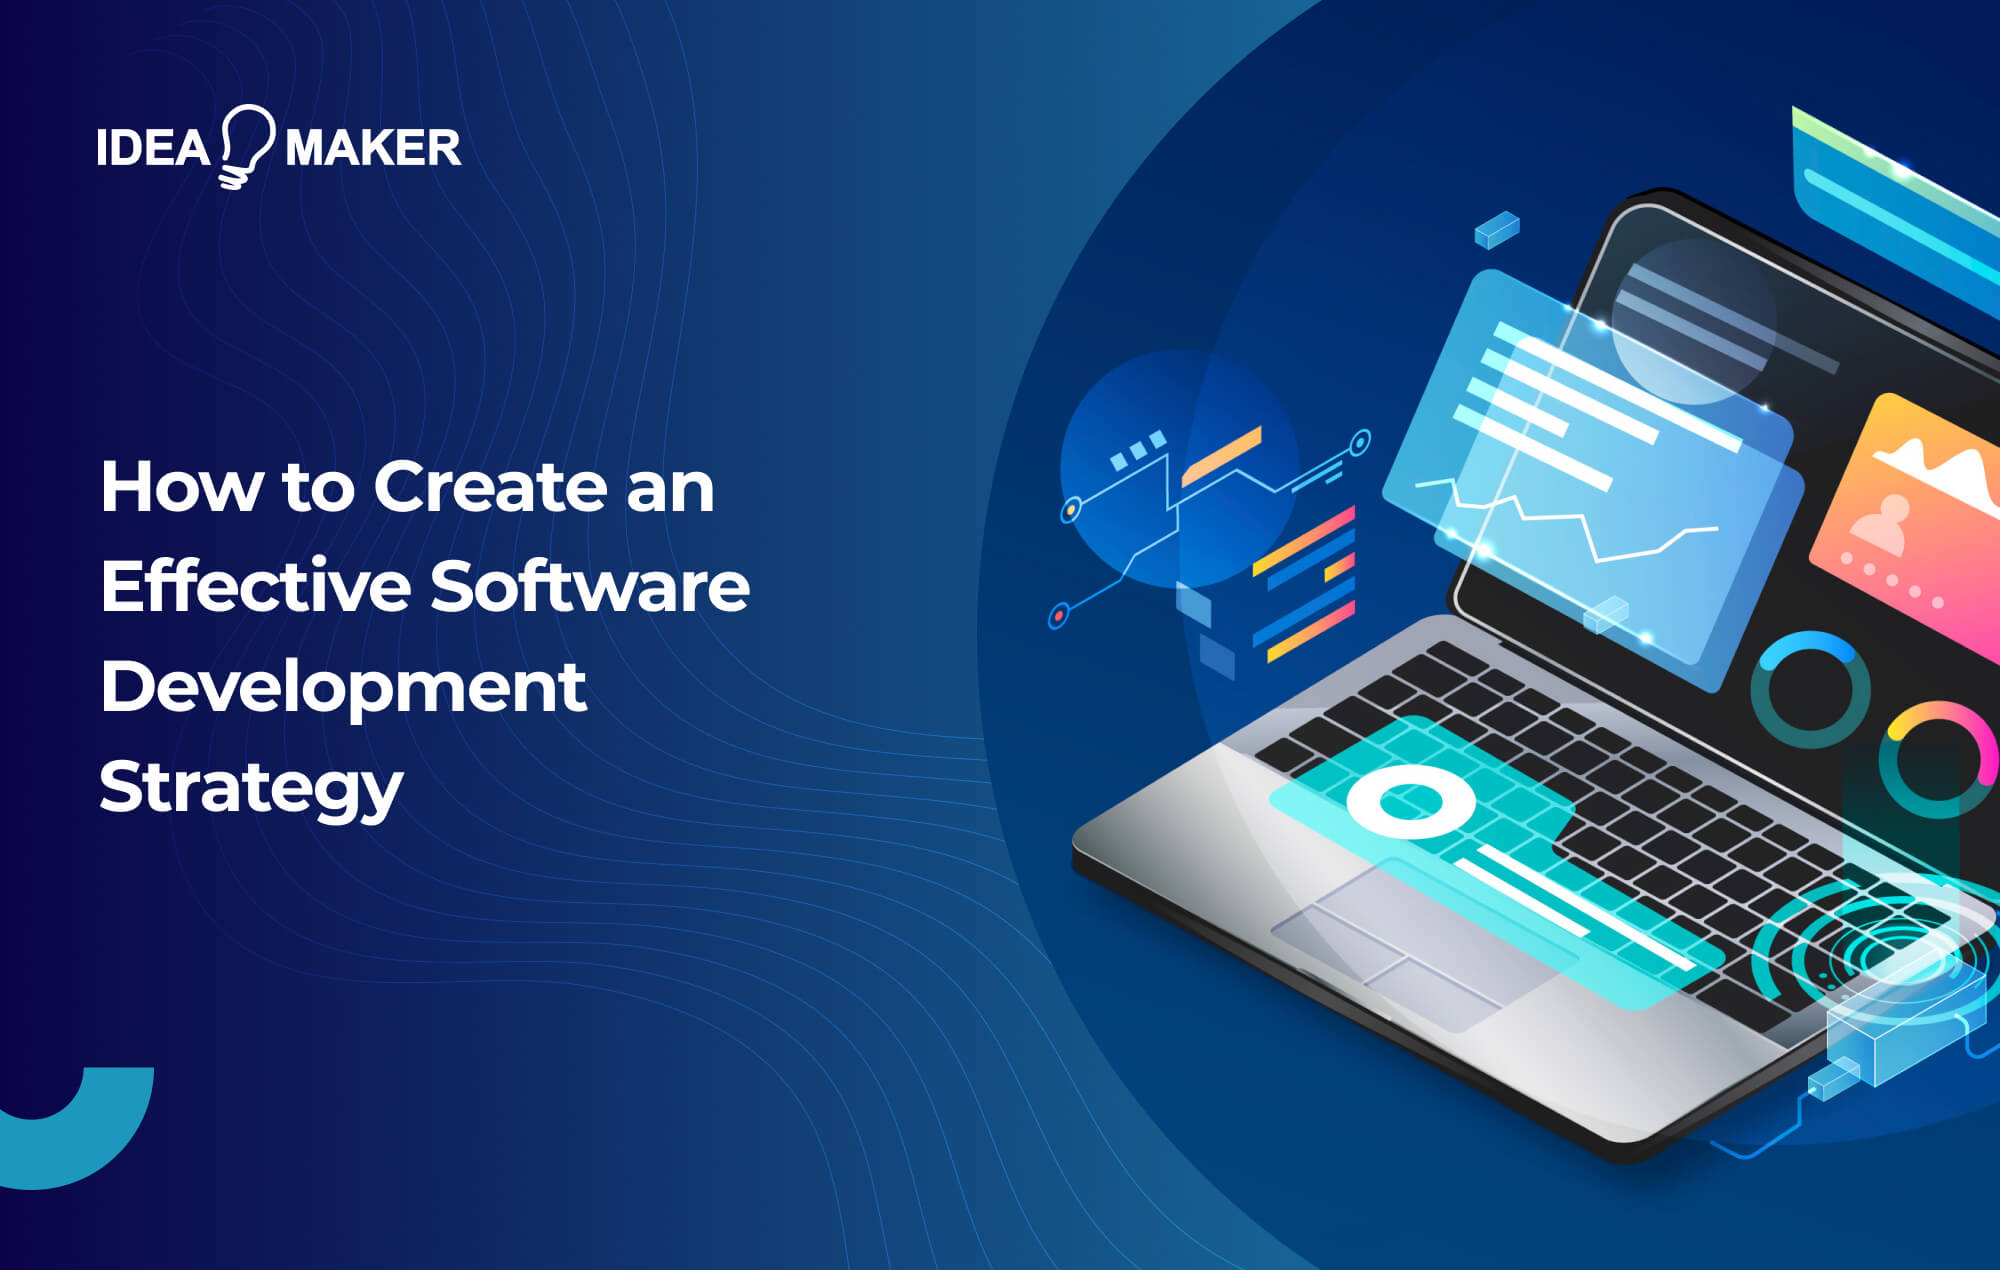 Ideamaker - How to Create an Effective Software Development Strategy